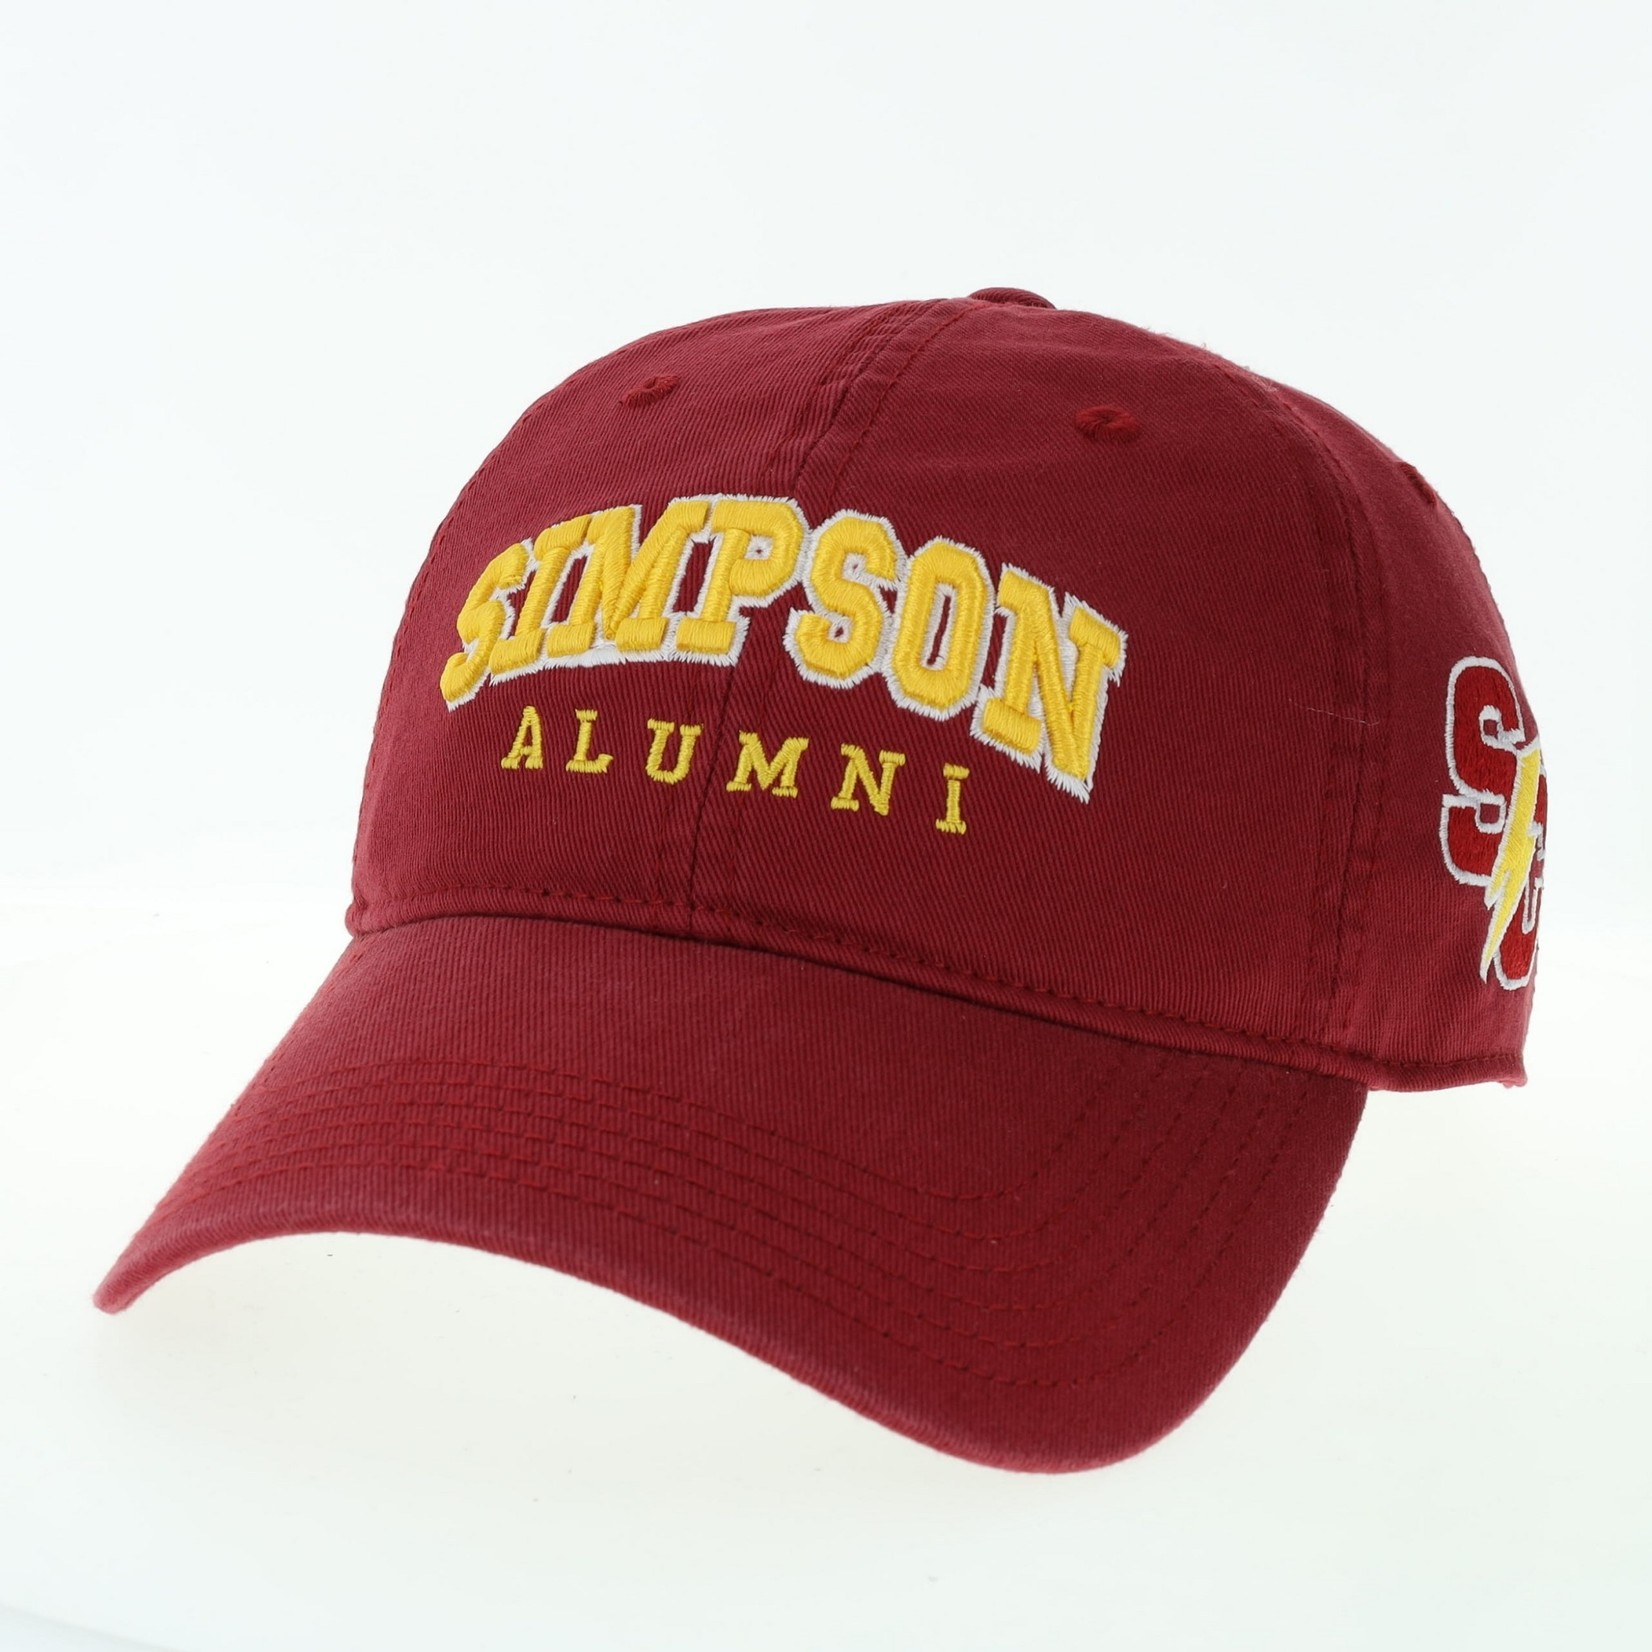 Legacy Simpson Alumni Hat